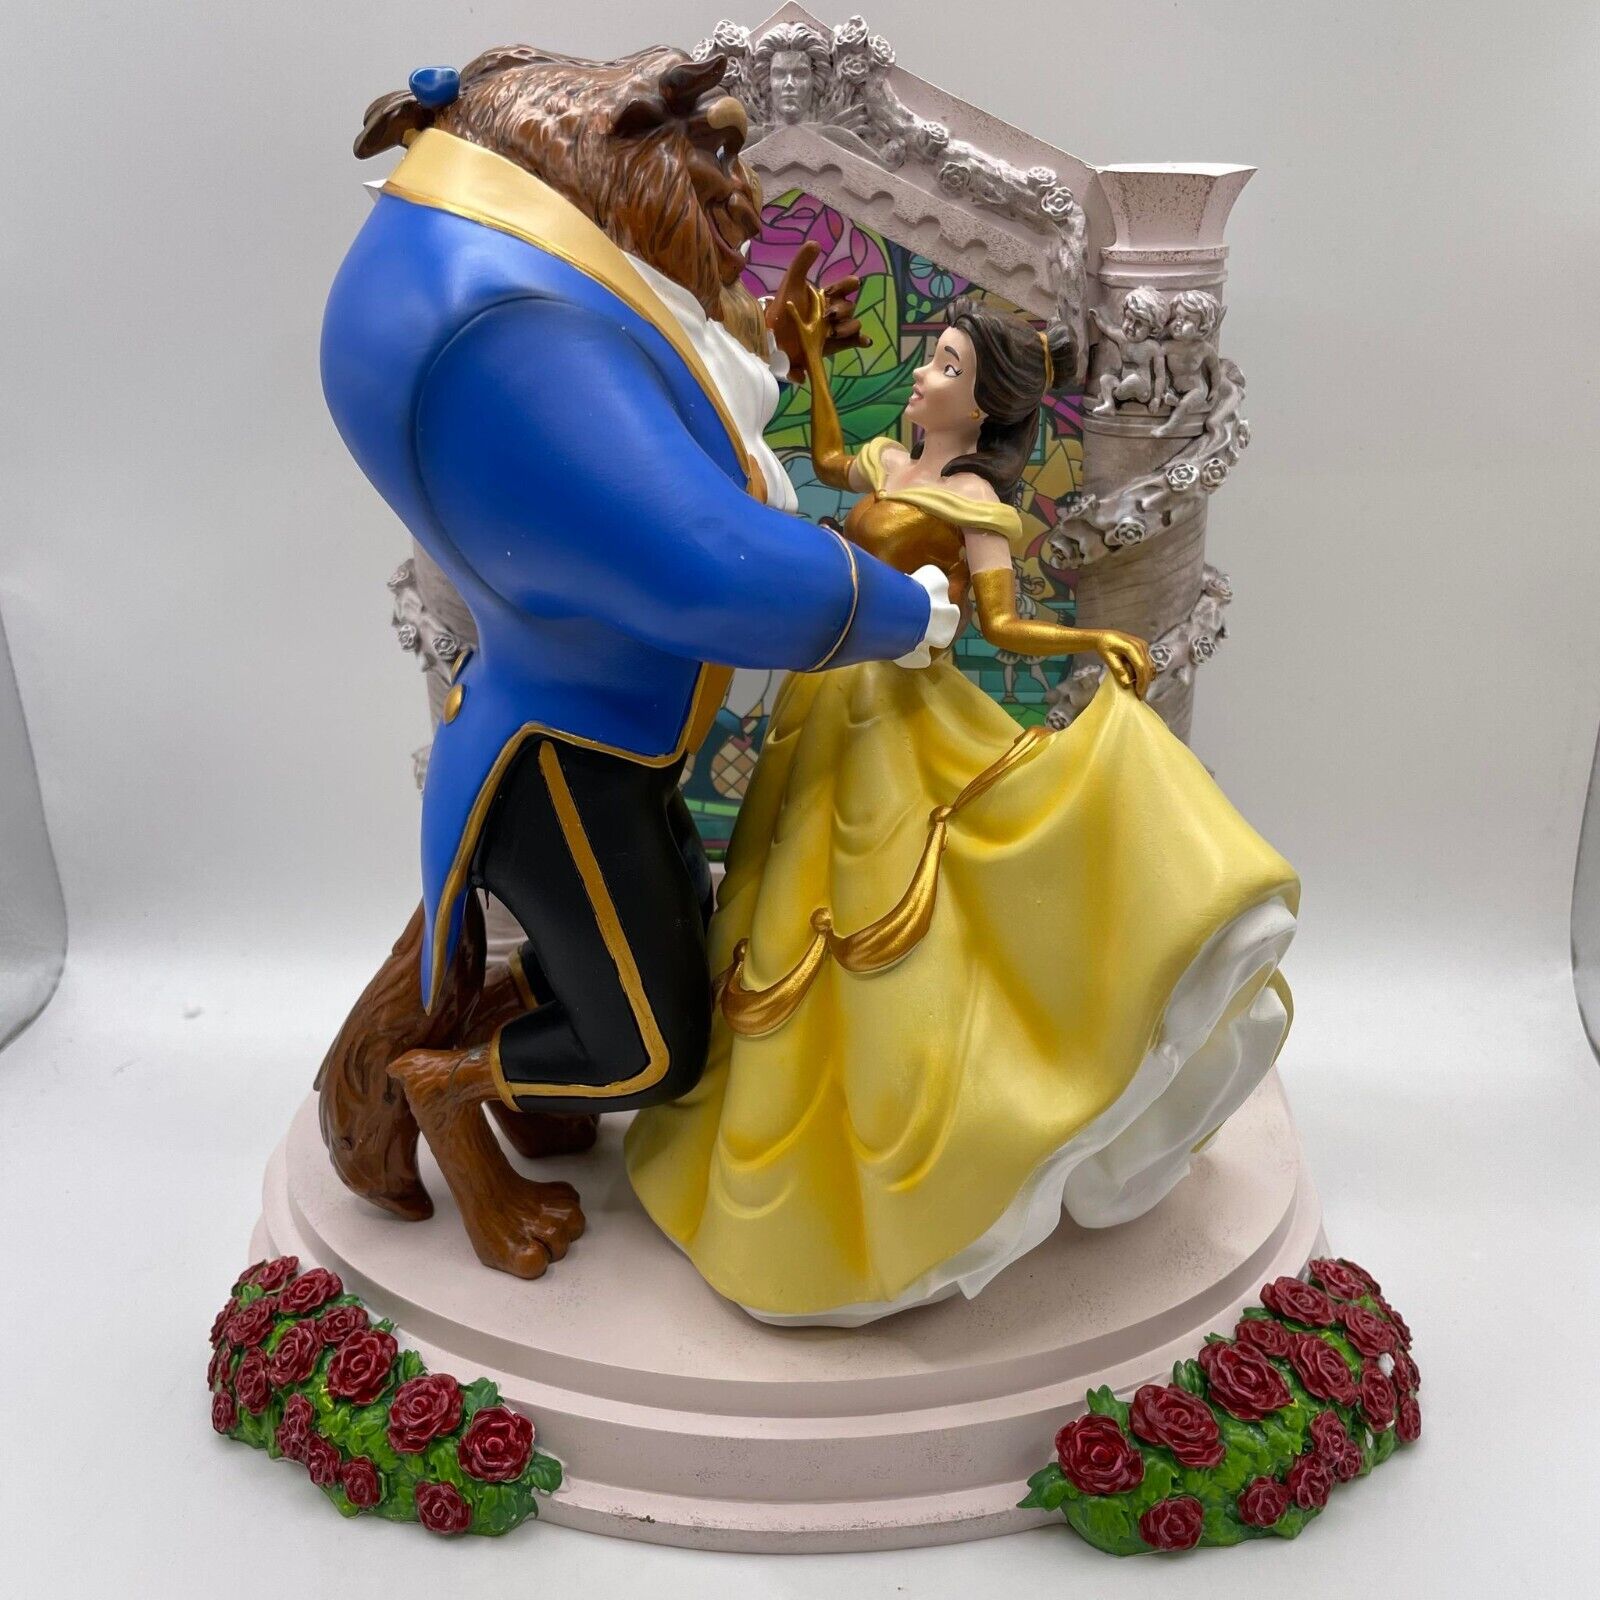 Disney Showcase Beauty and the Beast Light Up Figurine 6010730 Damaged